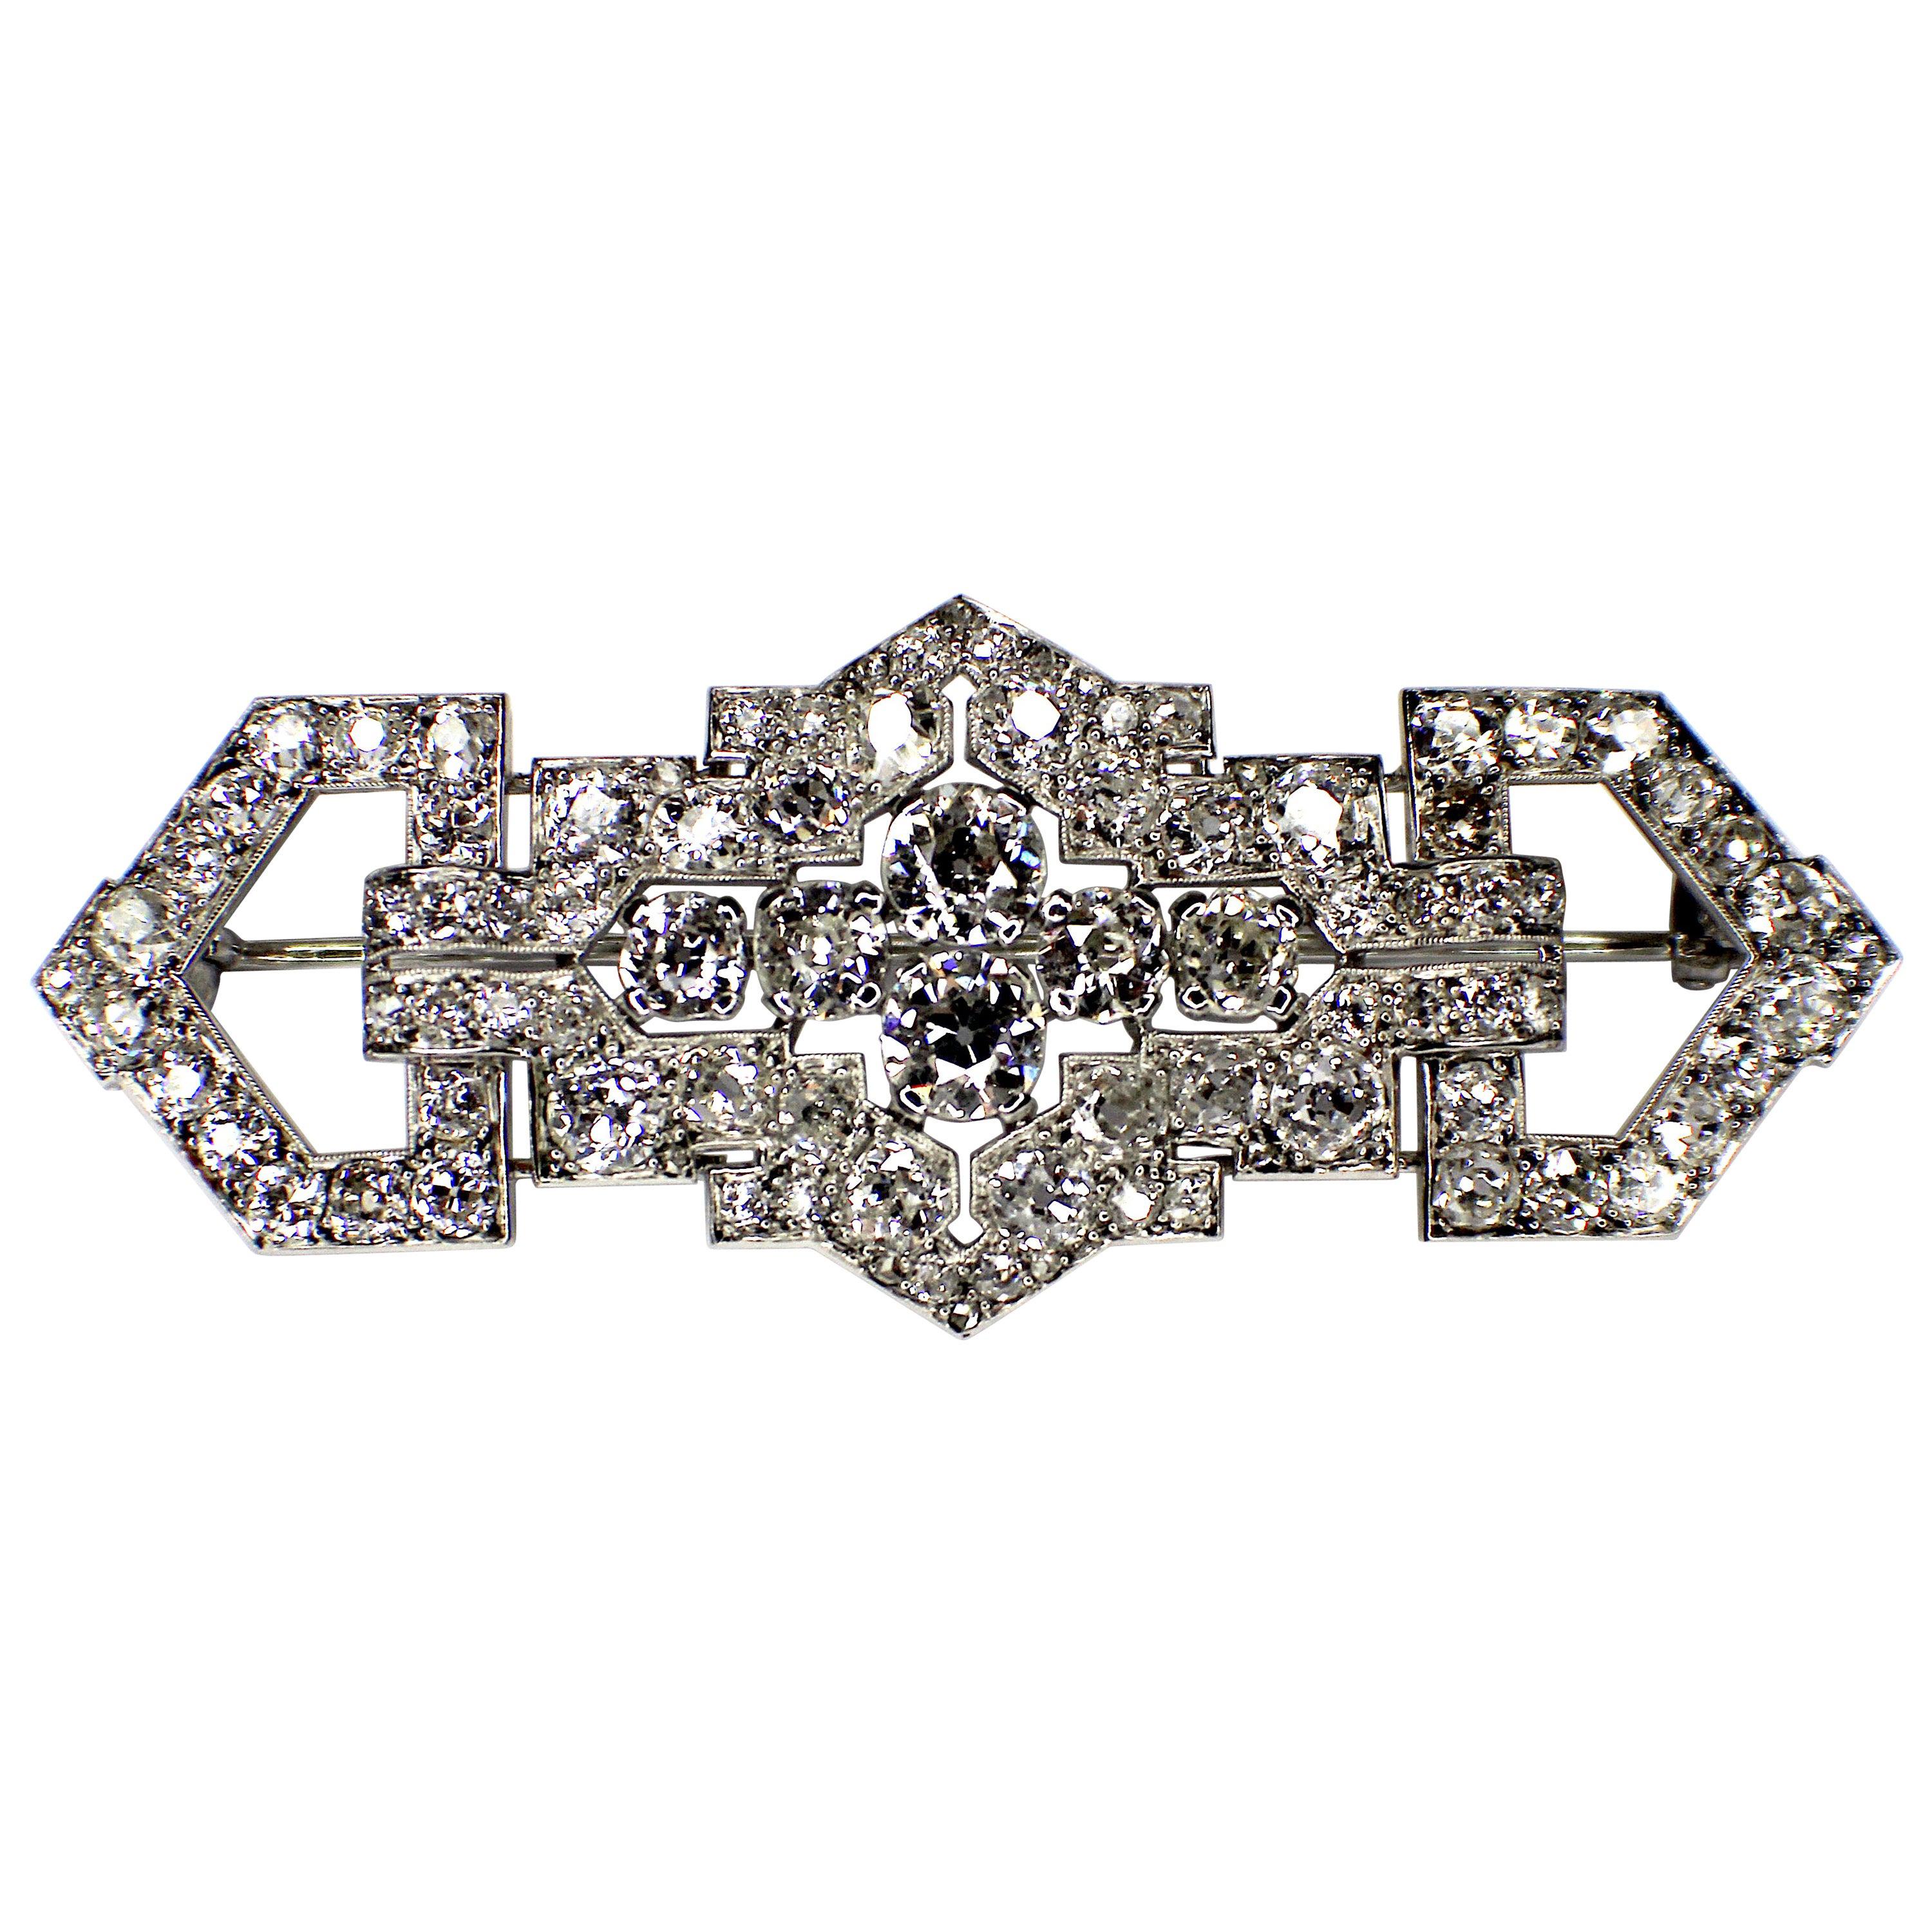 Gemolithos, Art Deco Diamond Brooch, French, by Cartier. Circa 1928